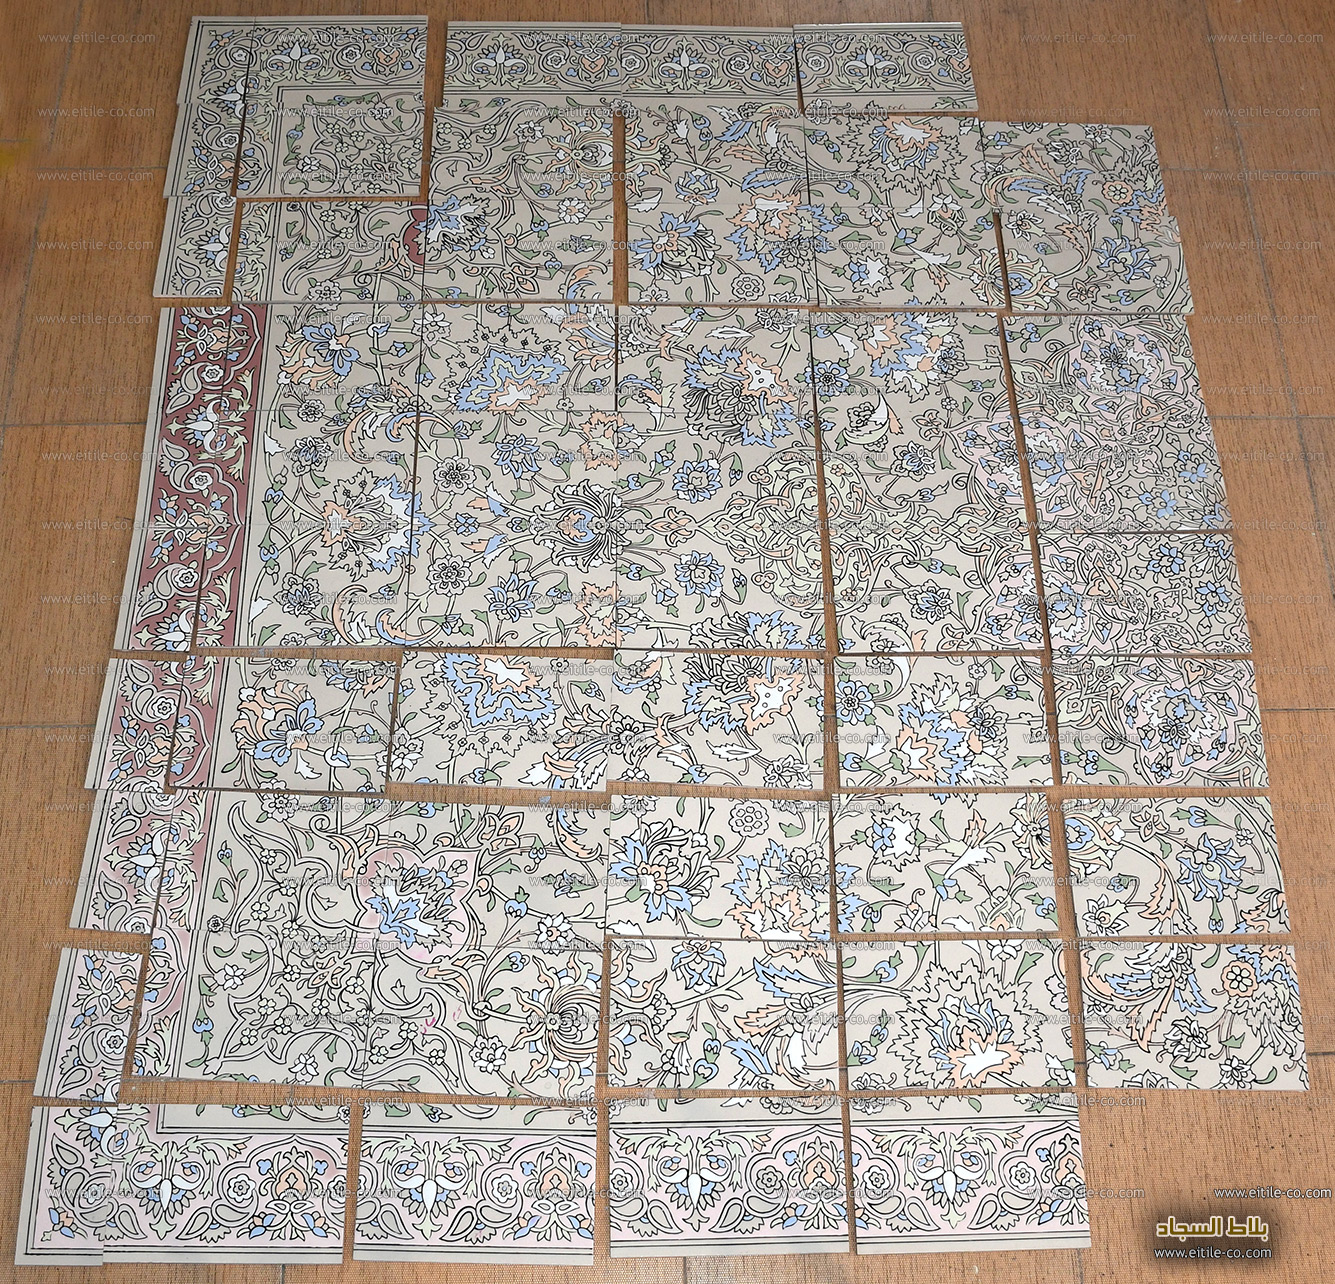 Handmade ceramic with carpet design for floor decoration, www.eitile.com